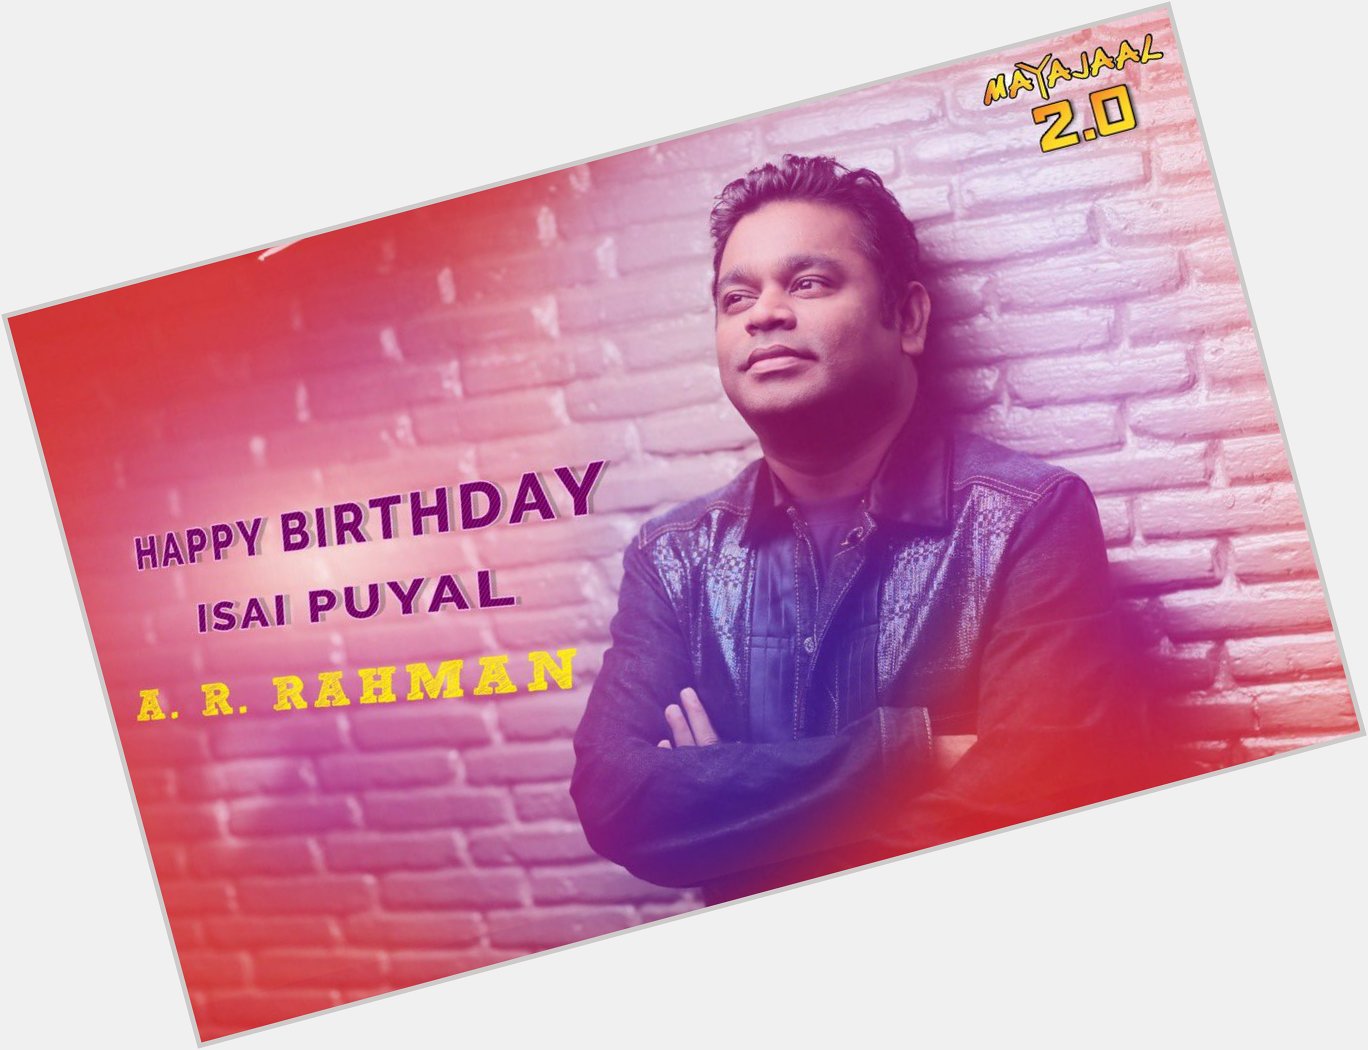 Mayajaal wishes A.R.Rahman a very happy birthday!     